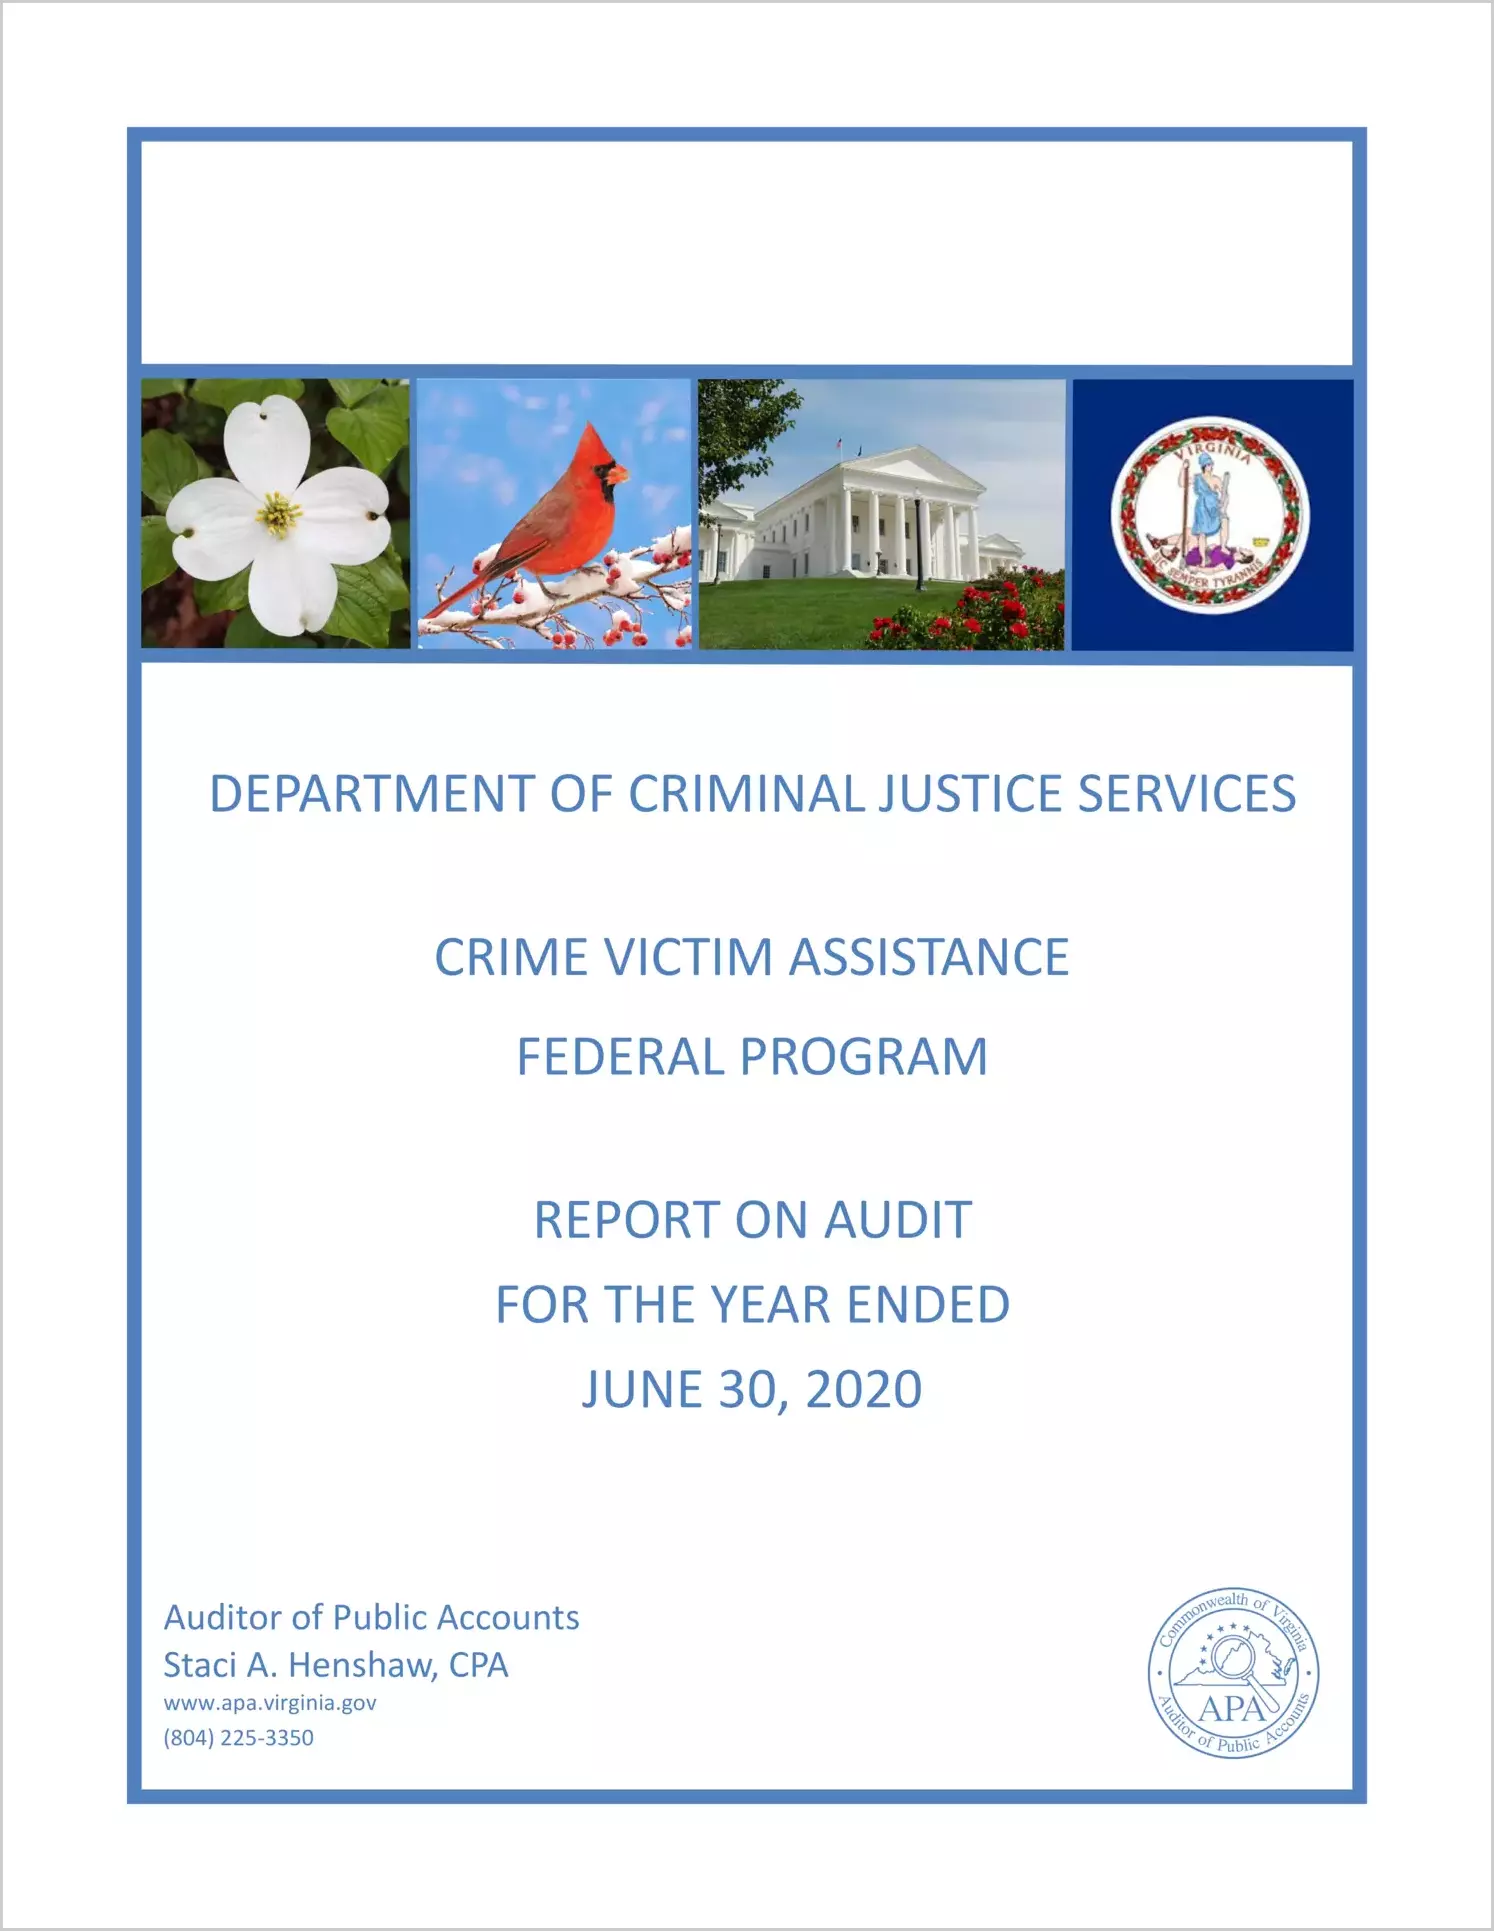 Department of Criminal Justice Services Crime Victim Assistance Federal Program for the year ended June 30, 2020